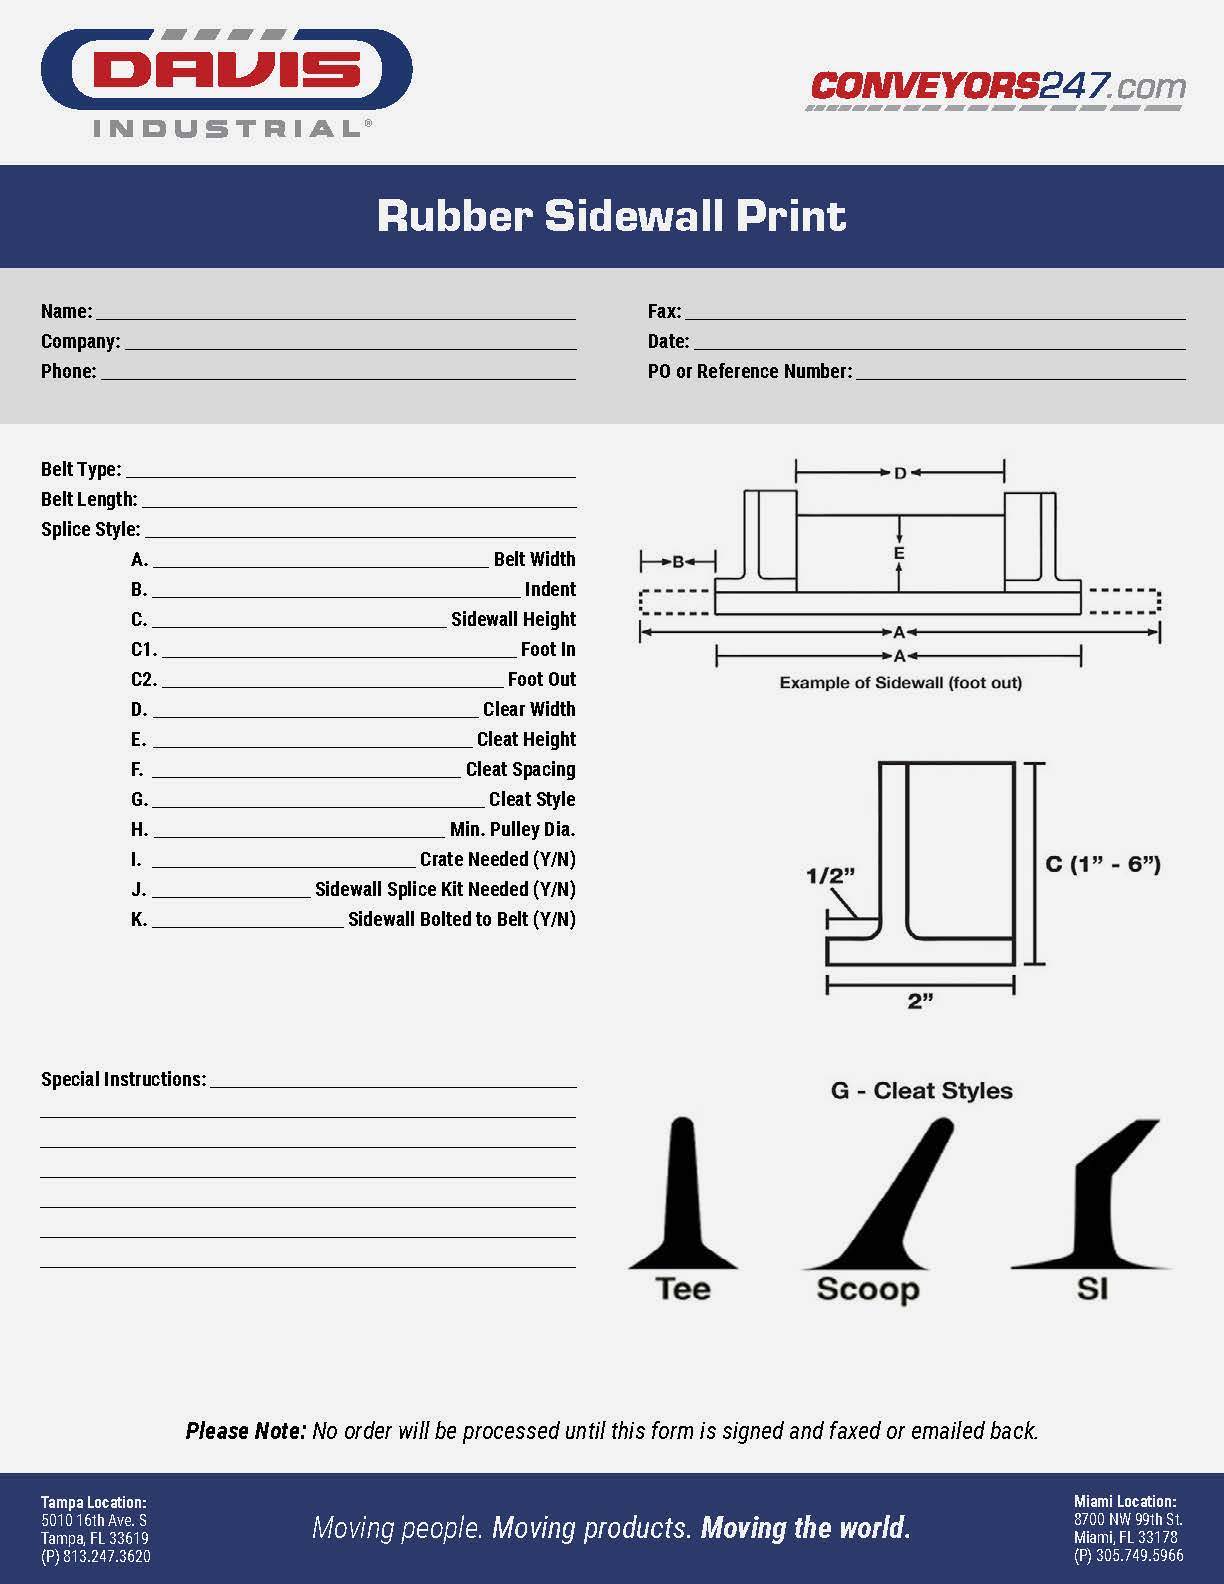 Davis_Rubber Sidewall Print_Form